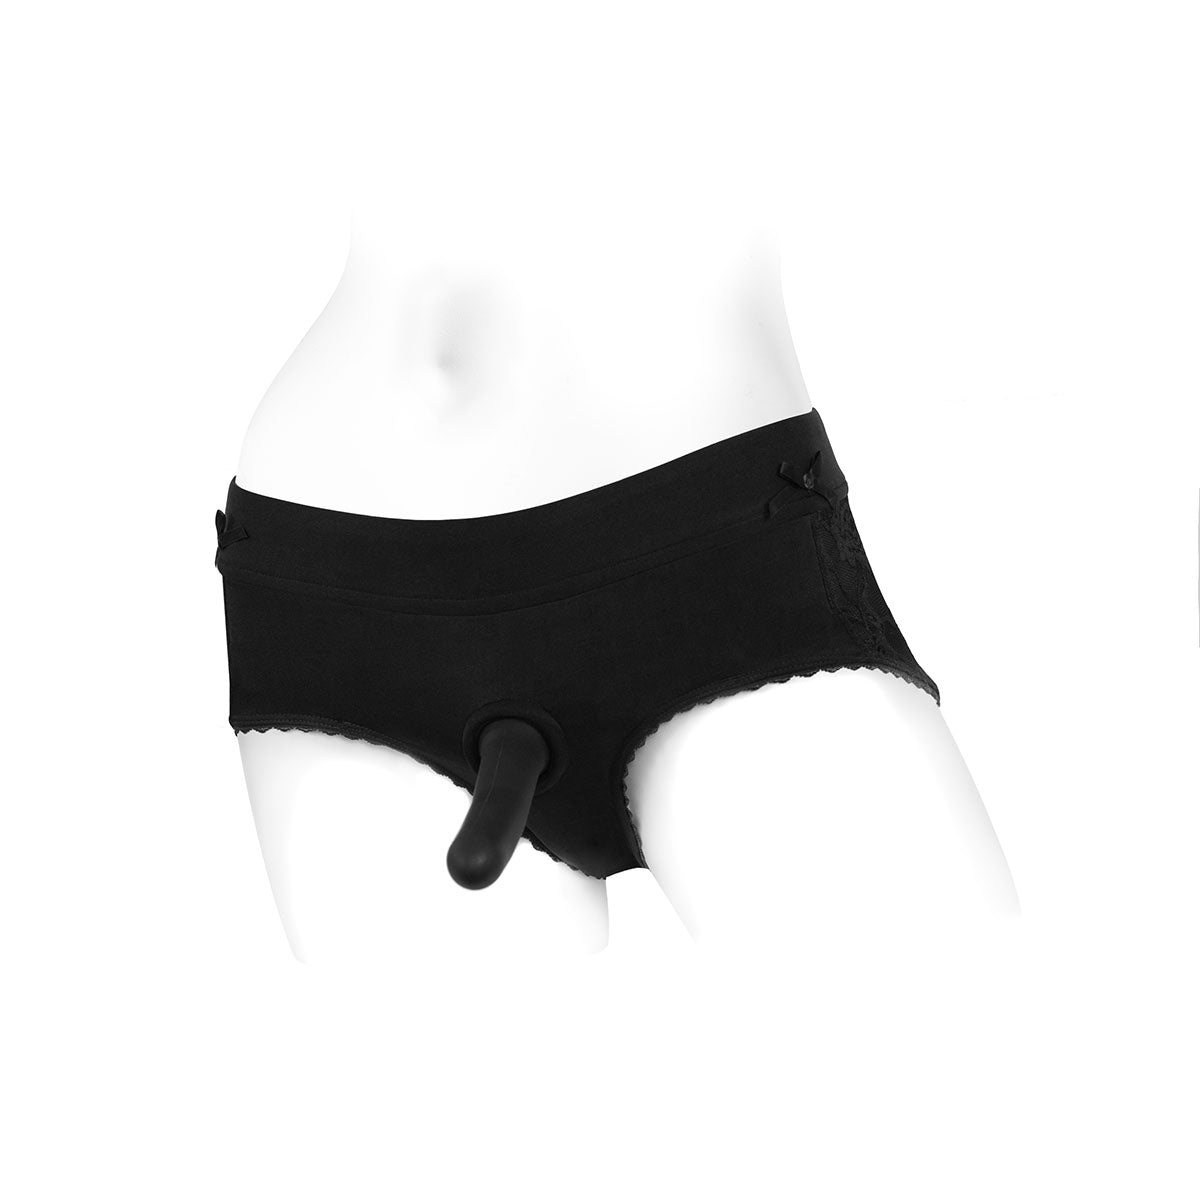 SpareParts Bella Harness Black-Black Nylon - Small Intimates Adult Boutique